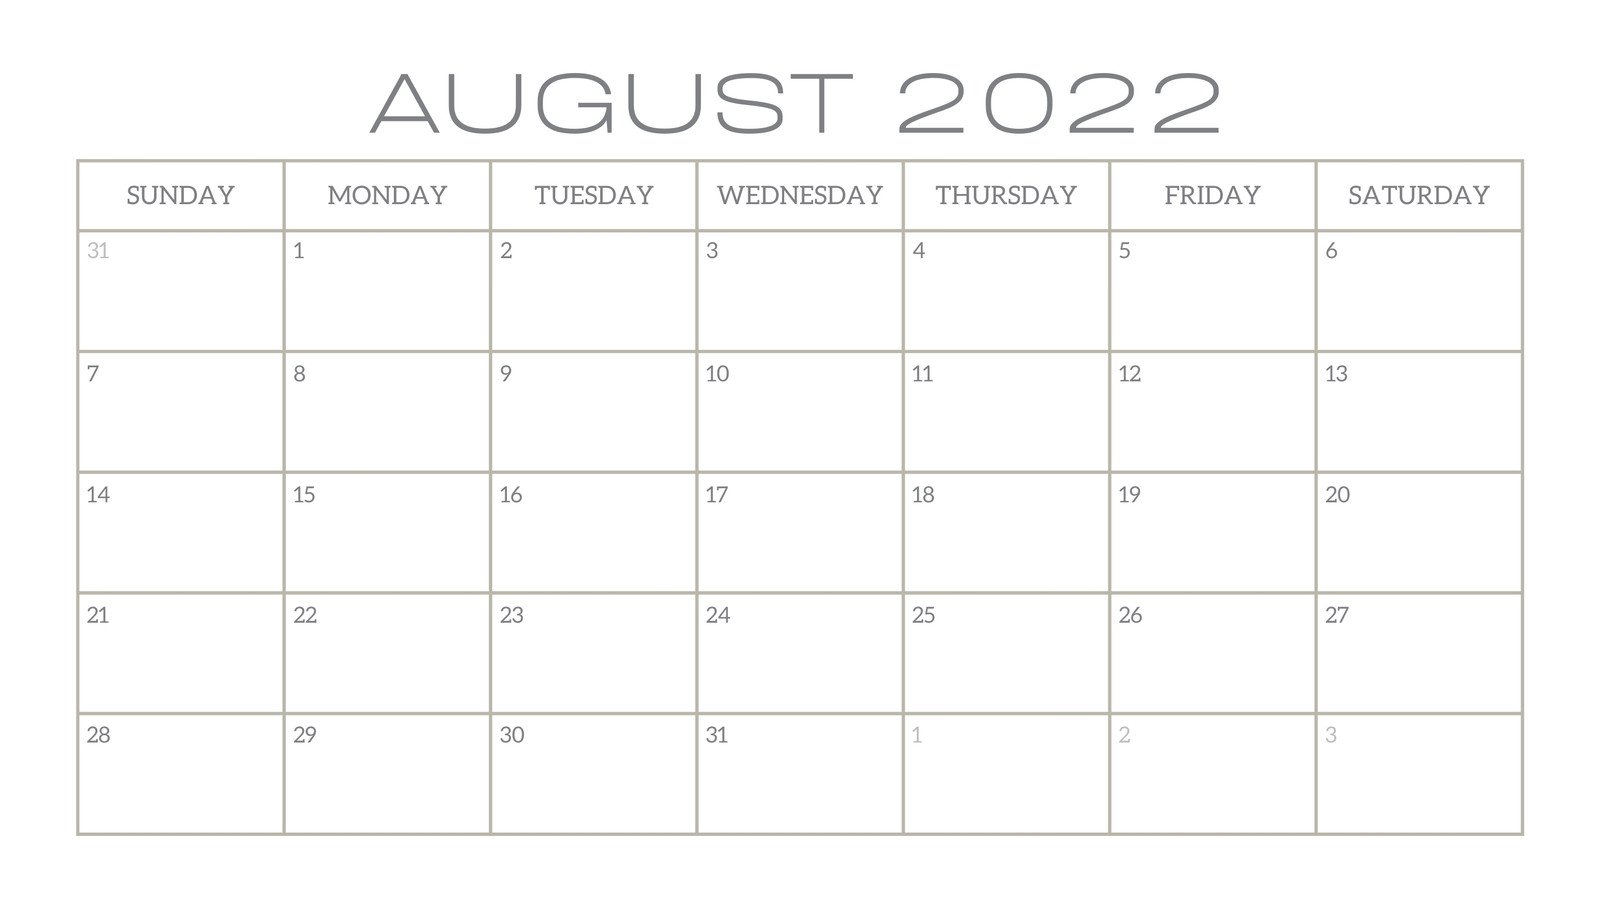 Blank Calendar 2021 Printable Template Calendar